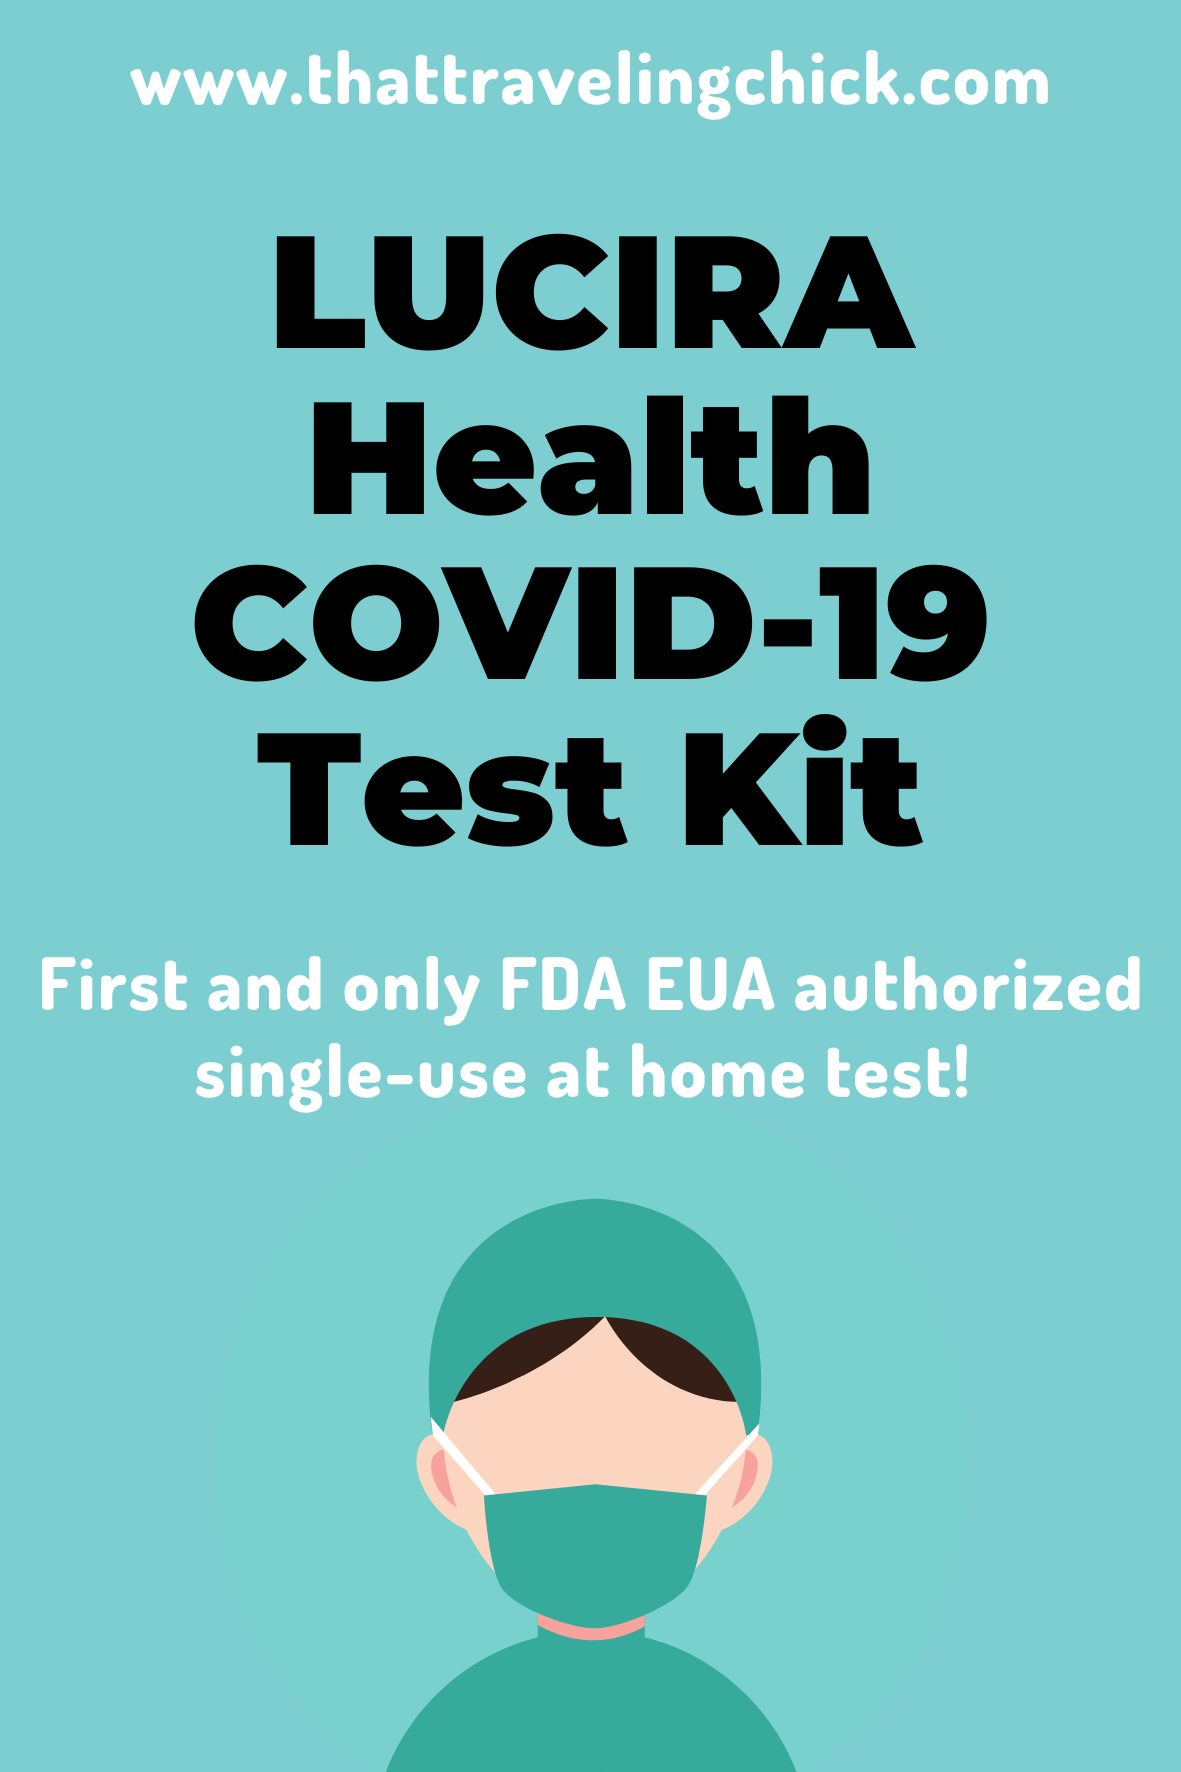 LUCIRA Health COVID-19 Test Kit